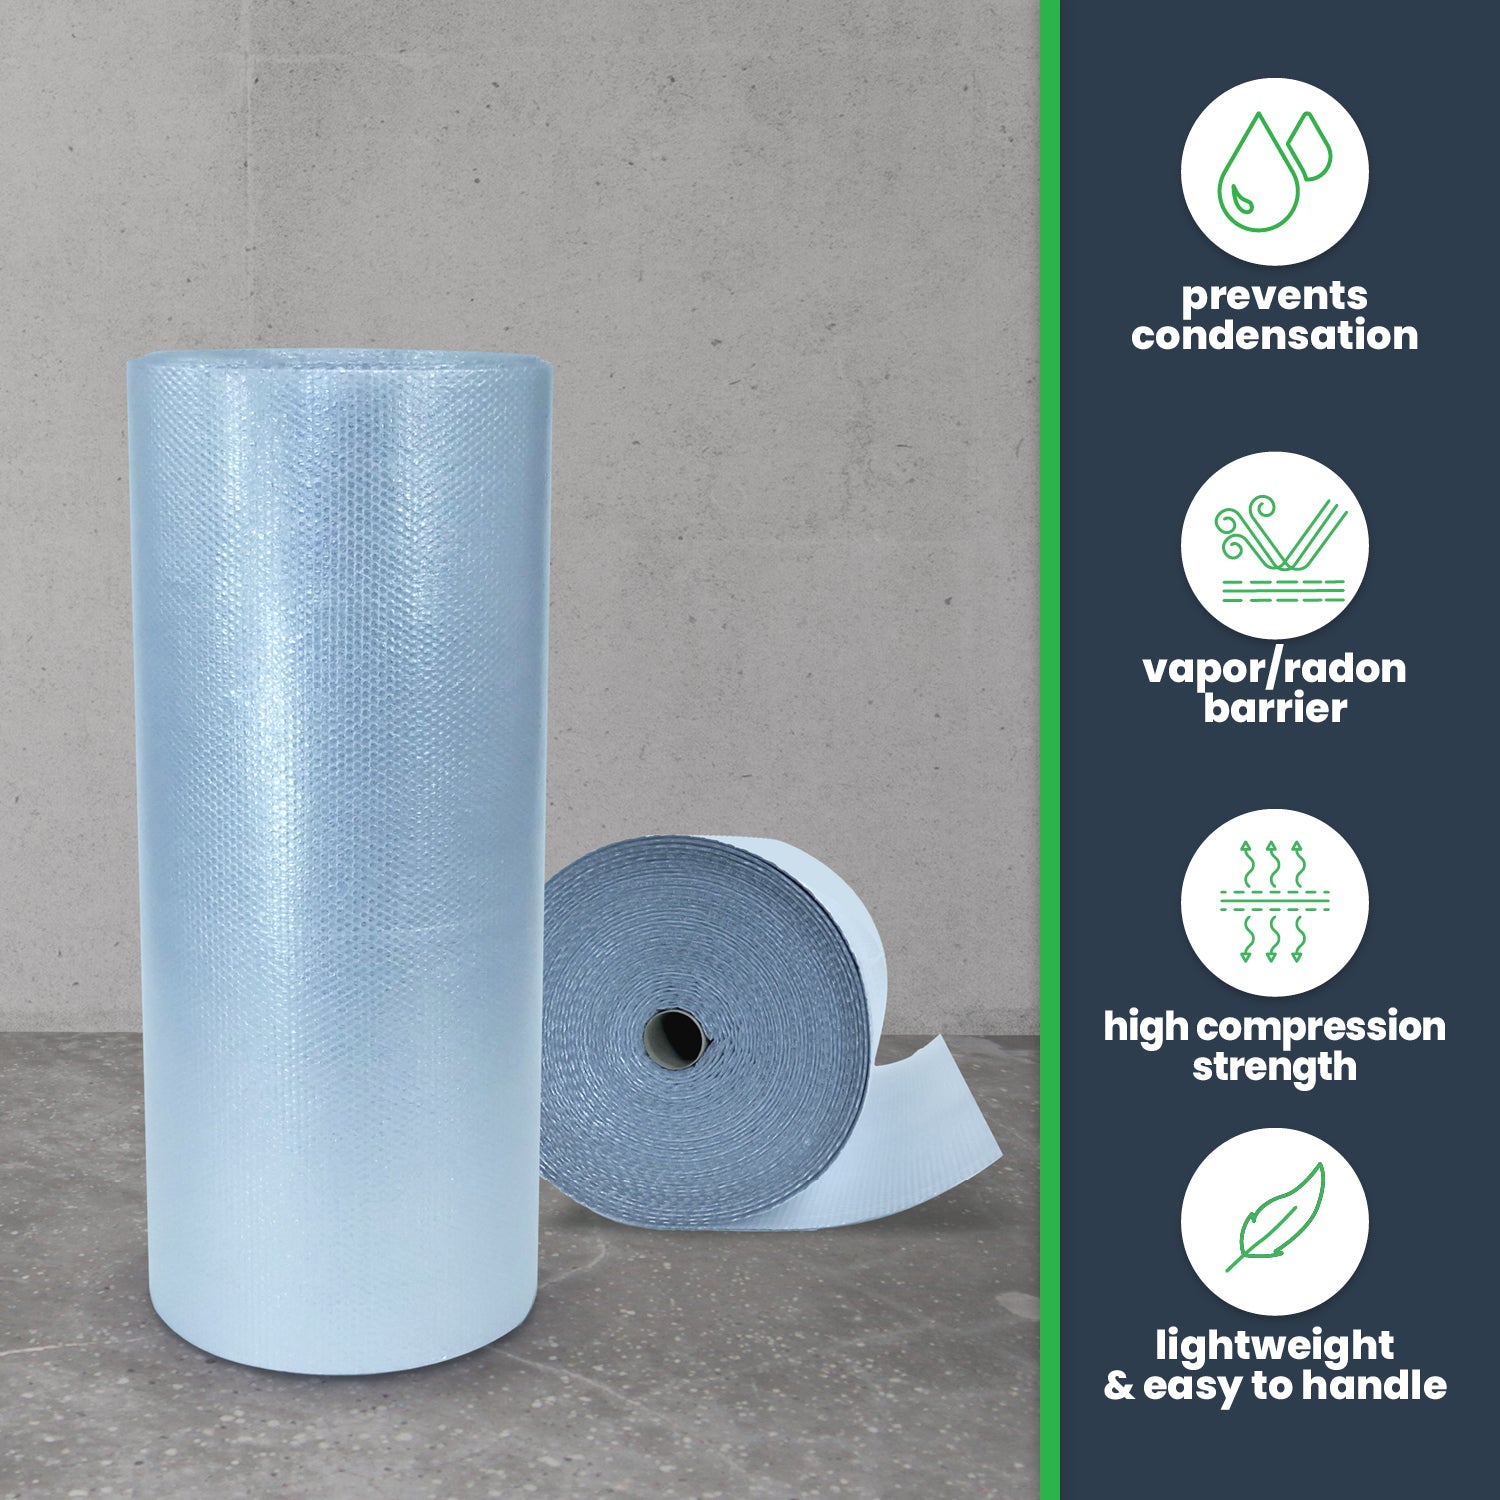 Under Slab Insulation prevents condensation, is a vapor/radon barrier, high compression strength, lightweight